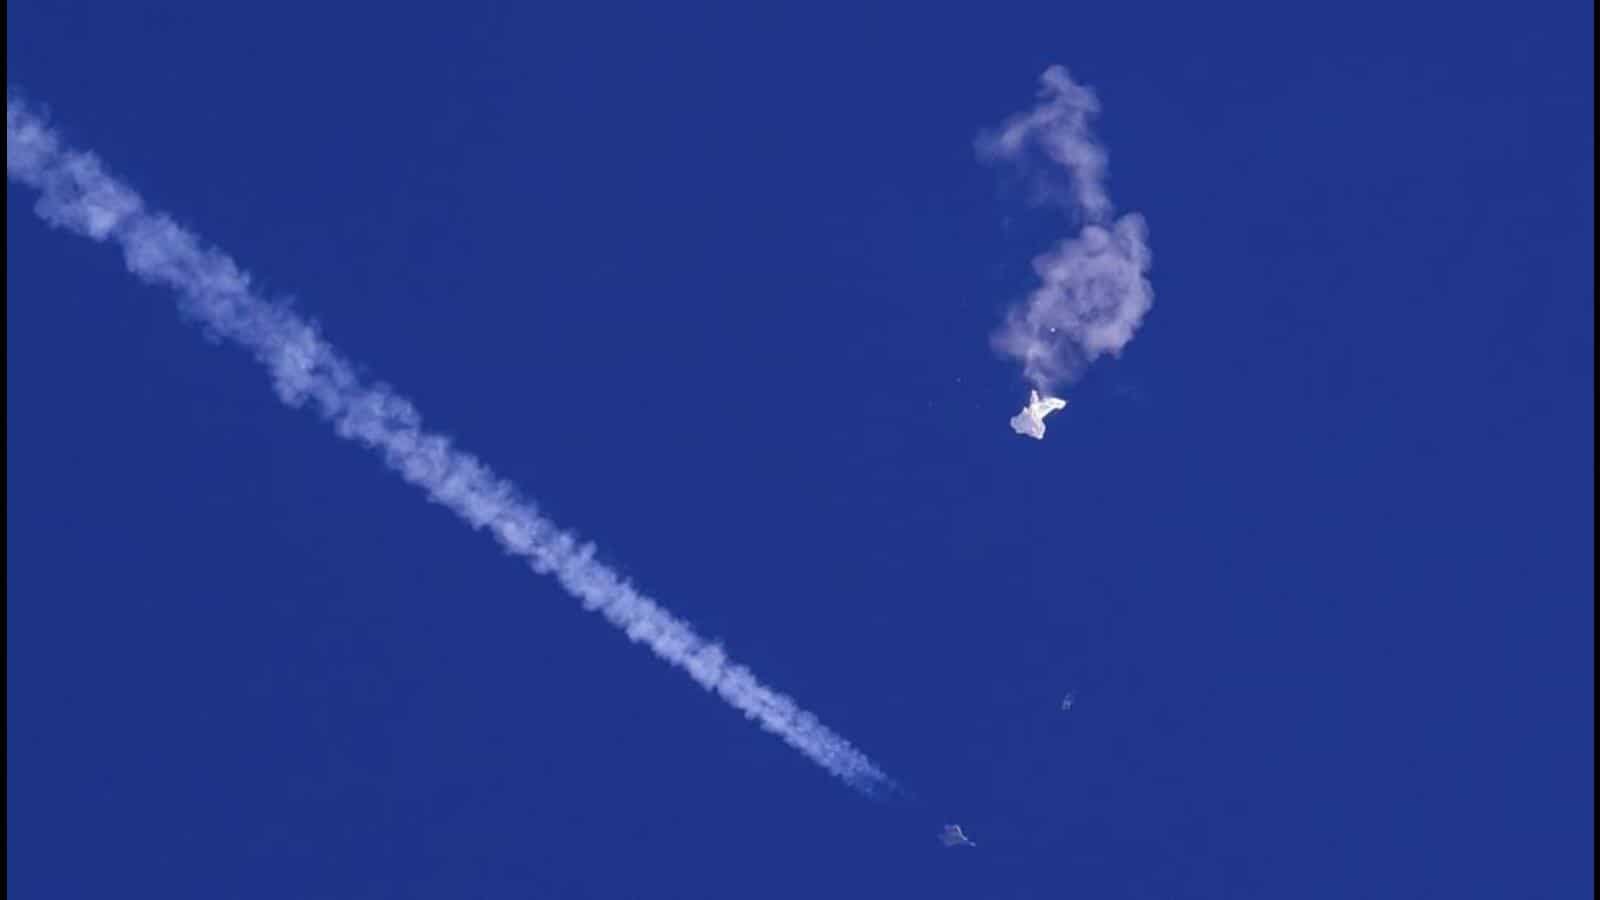 China says will ‘safeguard interests’ over balloon shootdown